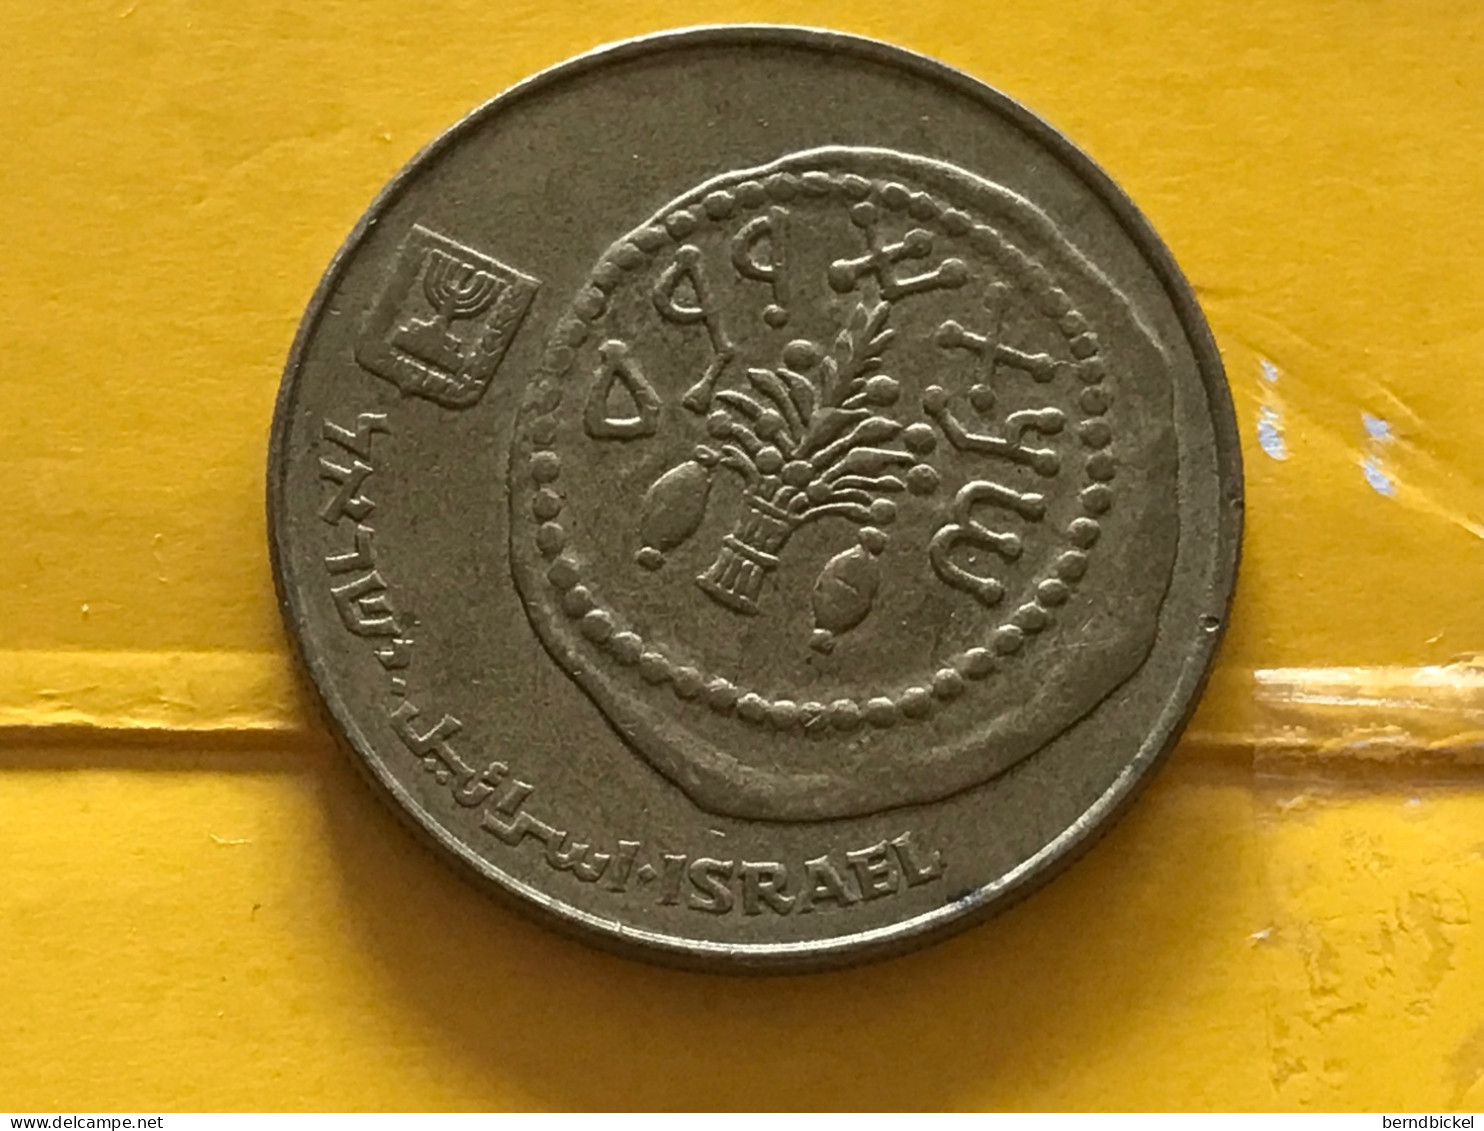 Münze Münzen Umlaufmünze Israel 50 Schekel 1984 - Israele